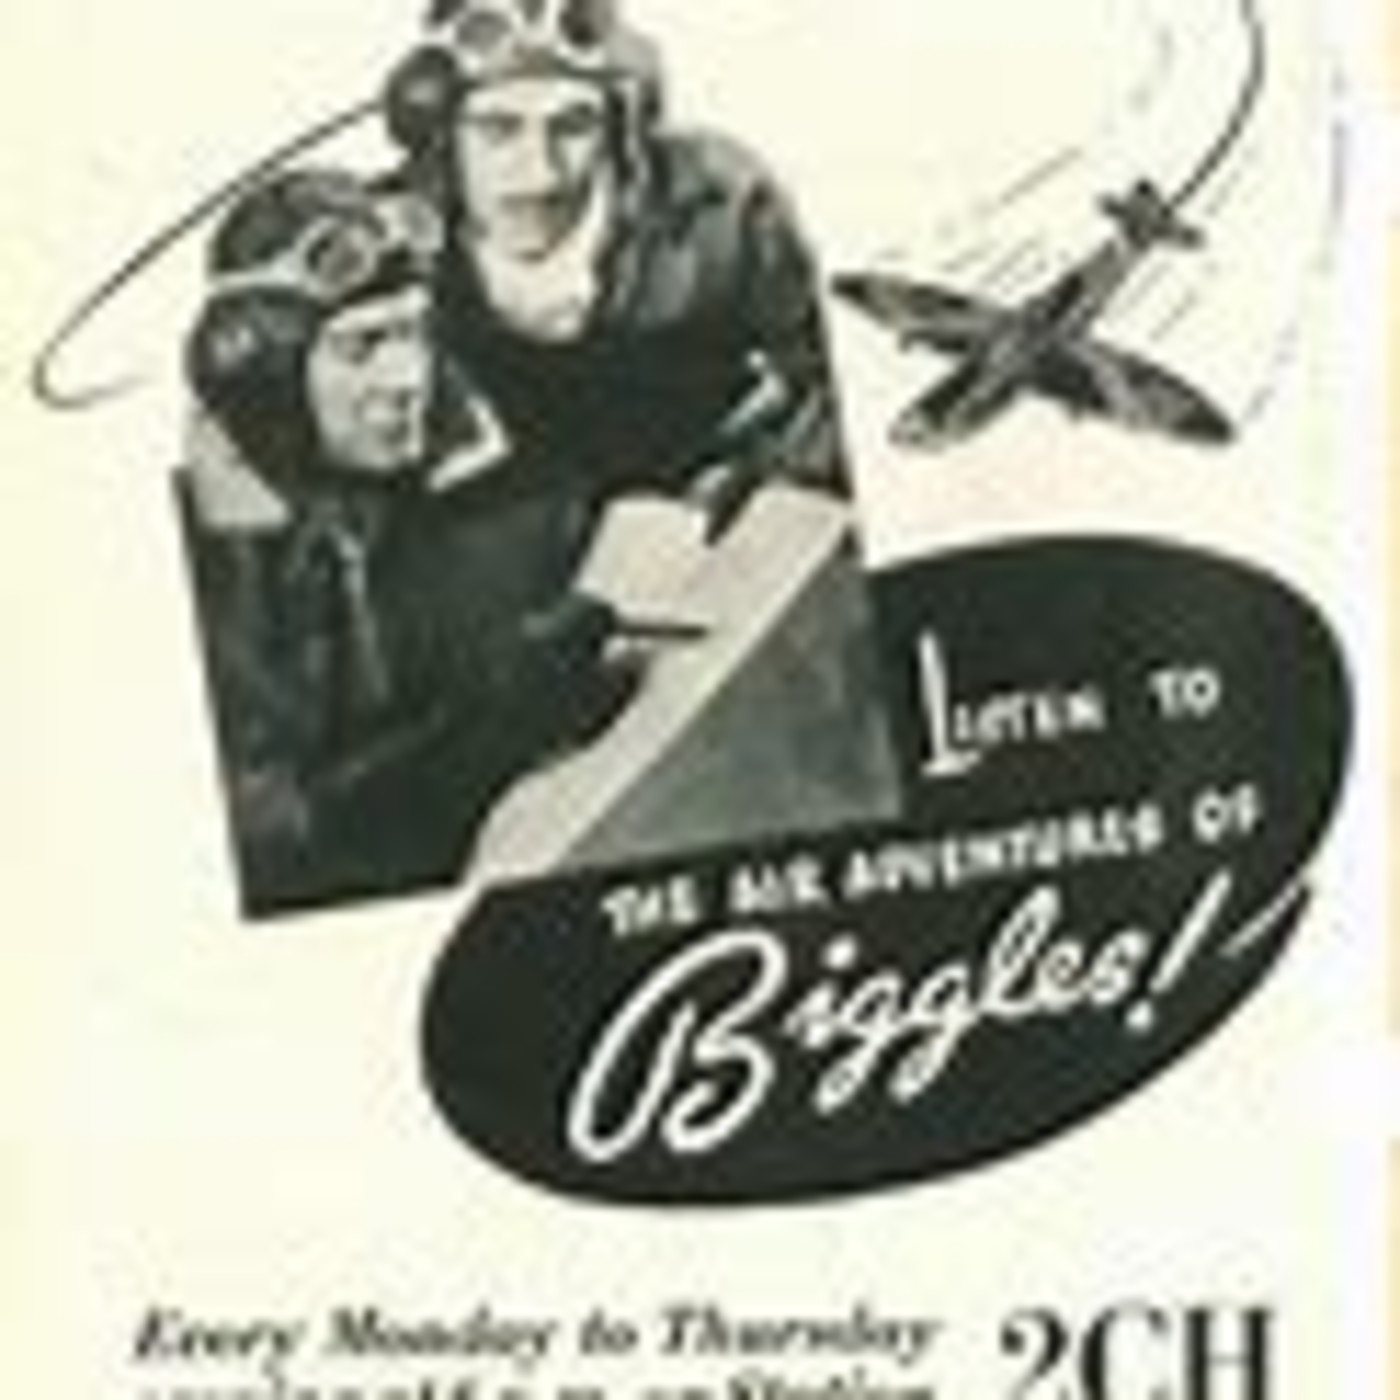 Air Adventures of Biggles xx-xx-xx International Brigade (37)